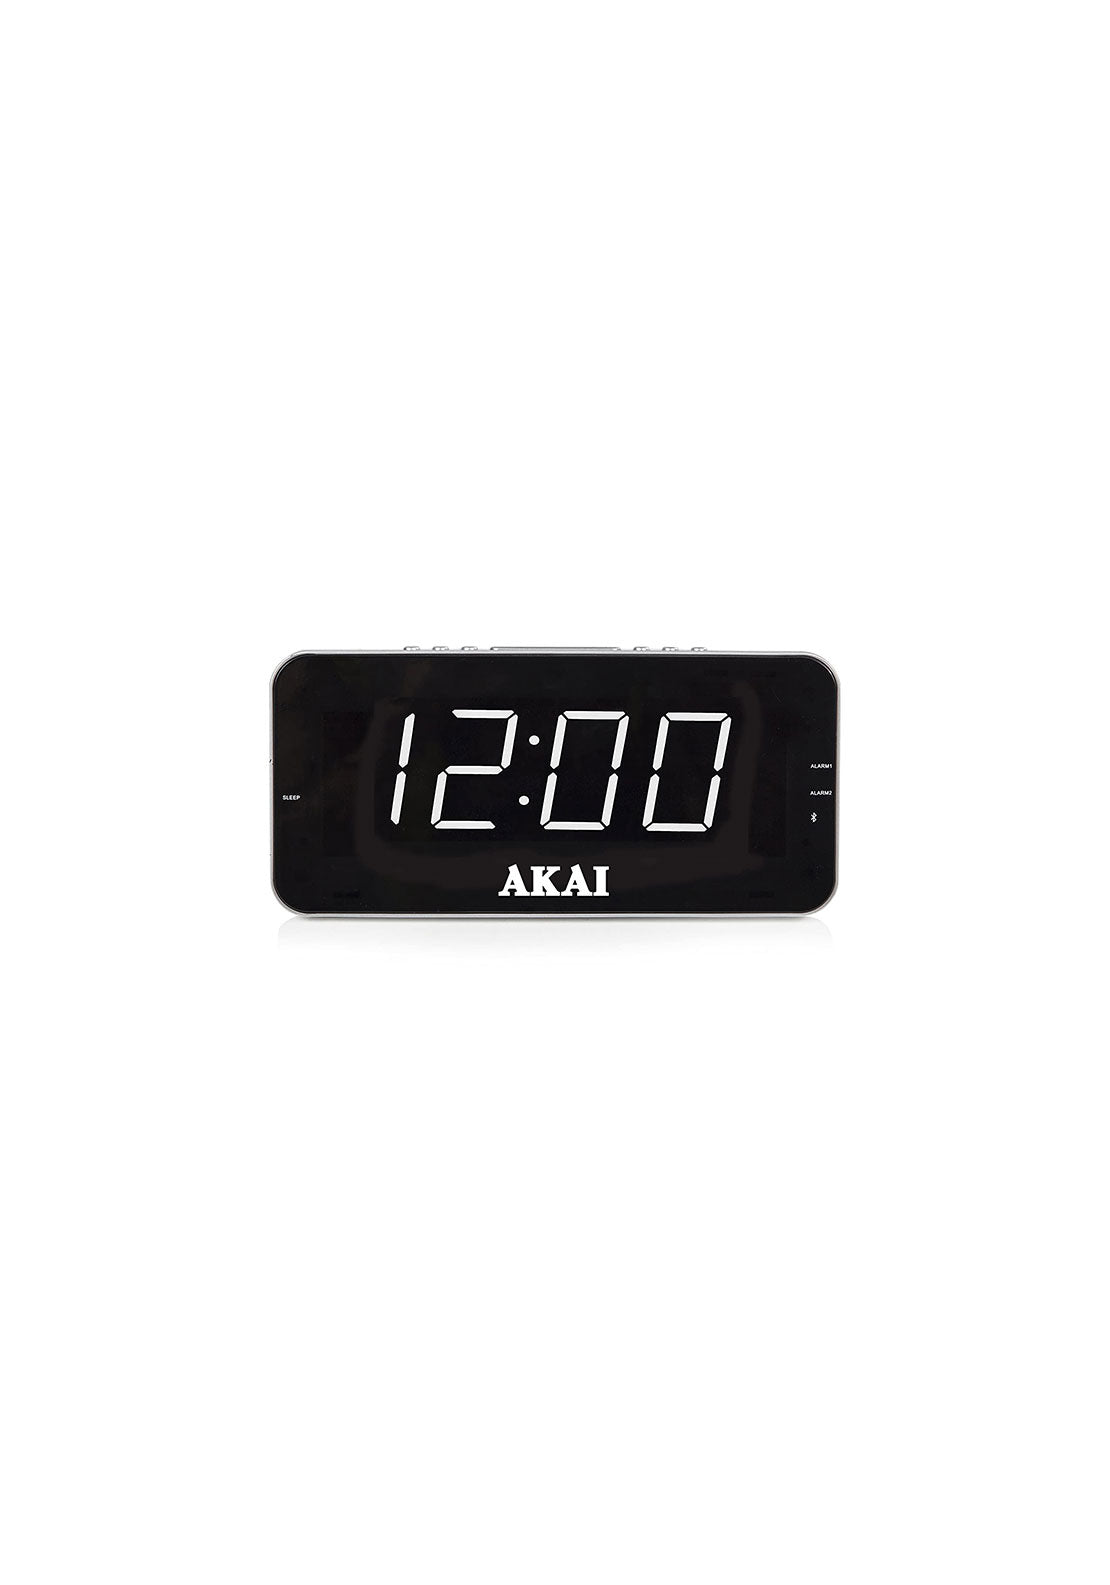 Akai Am/Fm Alarm Clock Radio | A61019 - Black 2 Shaws Department Stores